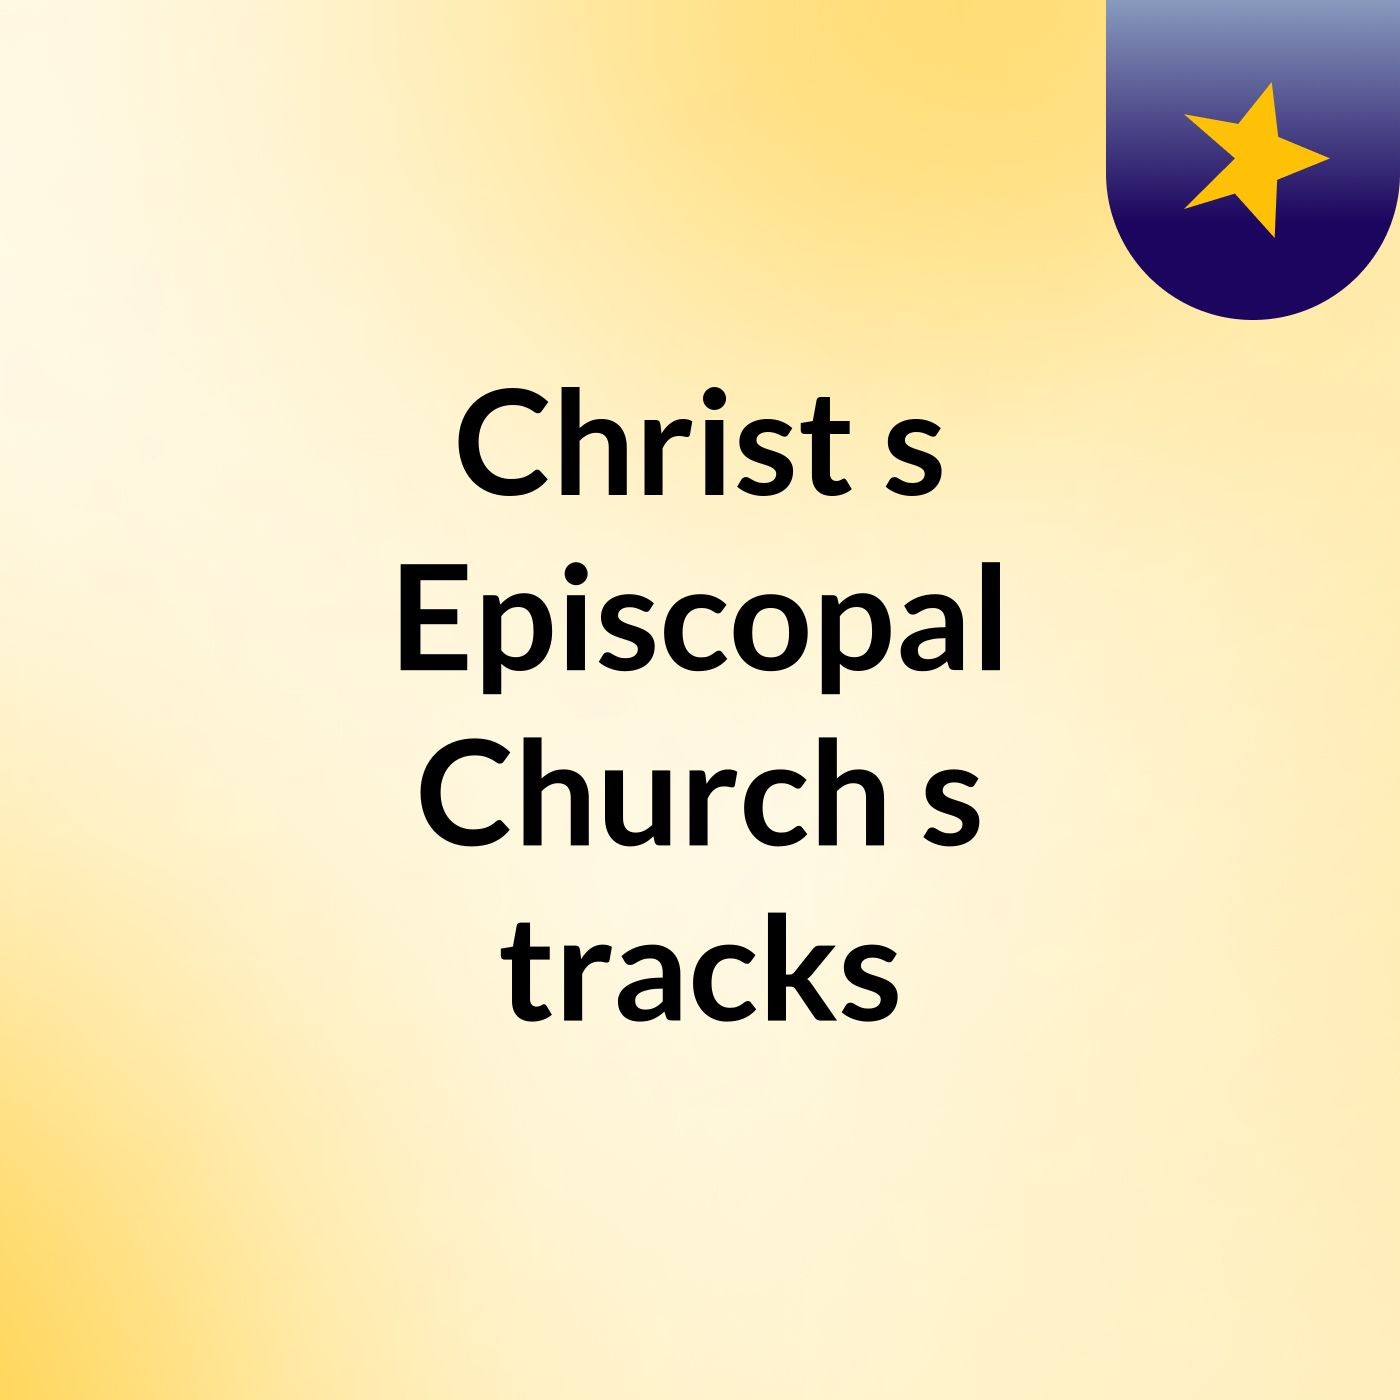 Christ's Episcopal Church's tracks